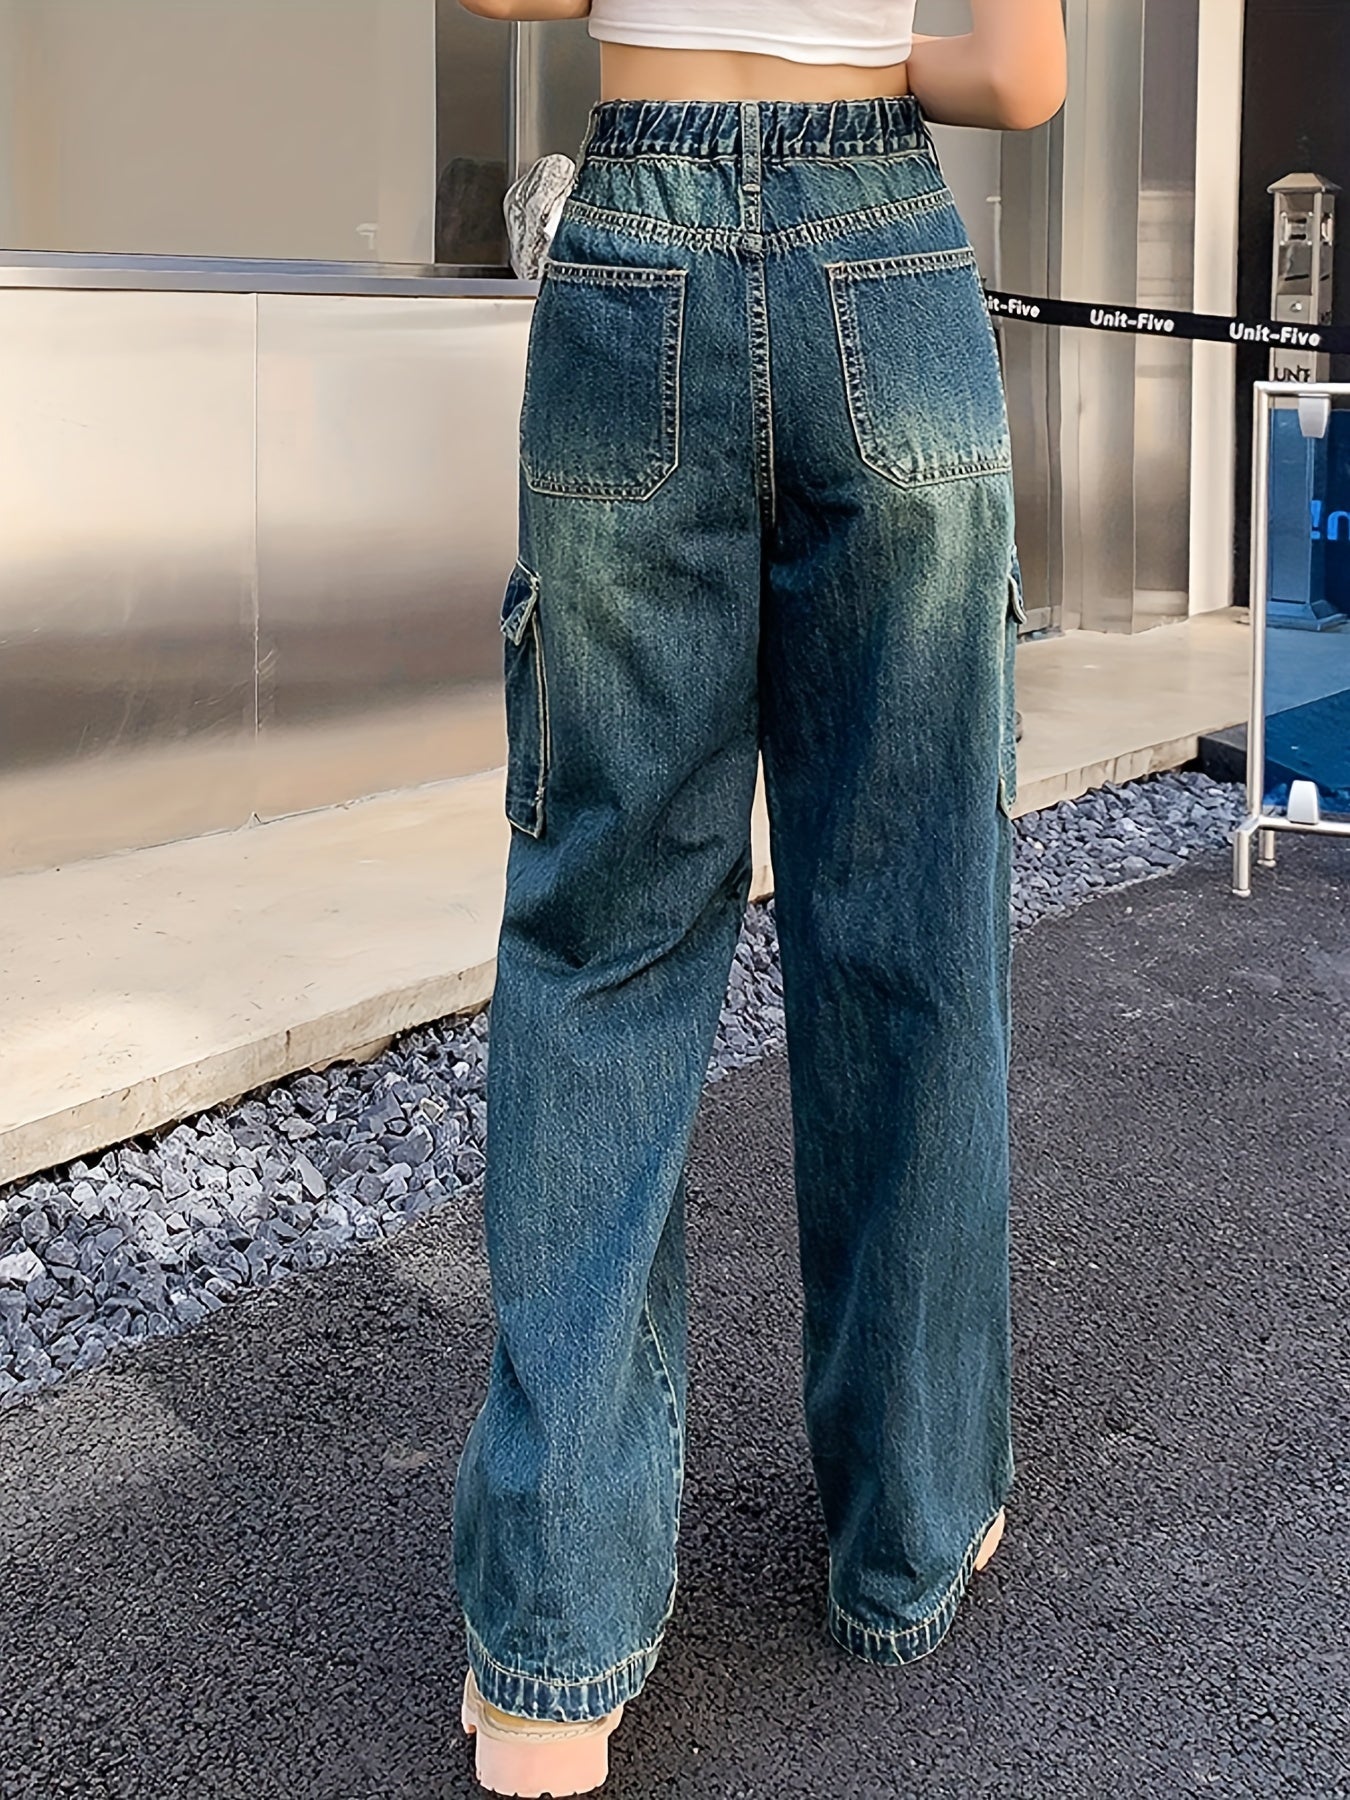 「lovevop」Flap Cargo Pockets Water Ripple Embossed Jeans, Half Elastic Waistband Street Hip Pop Style Straight Denim Pants, Women's Denim Jeans & Clothing